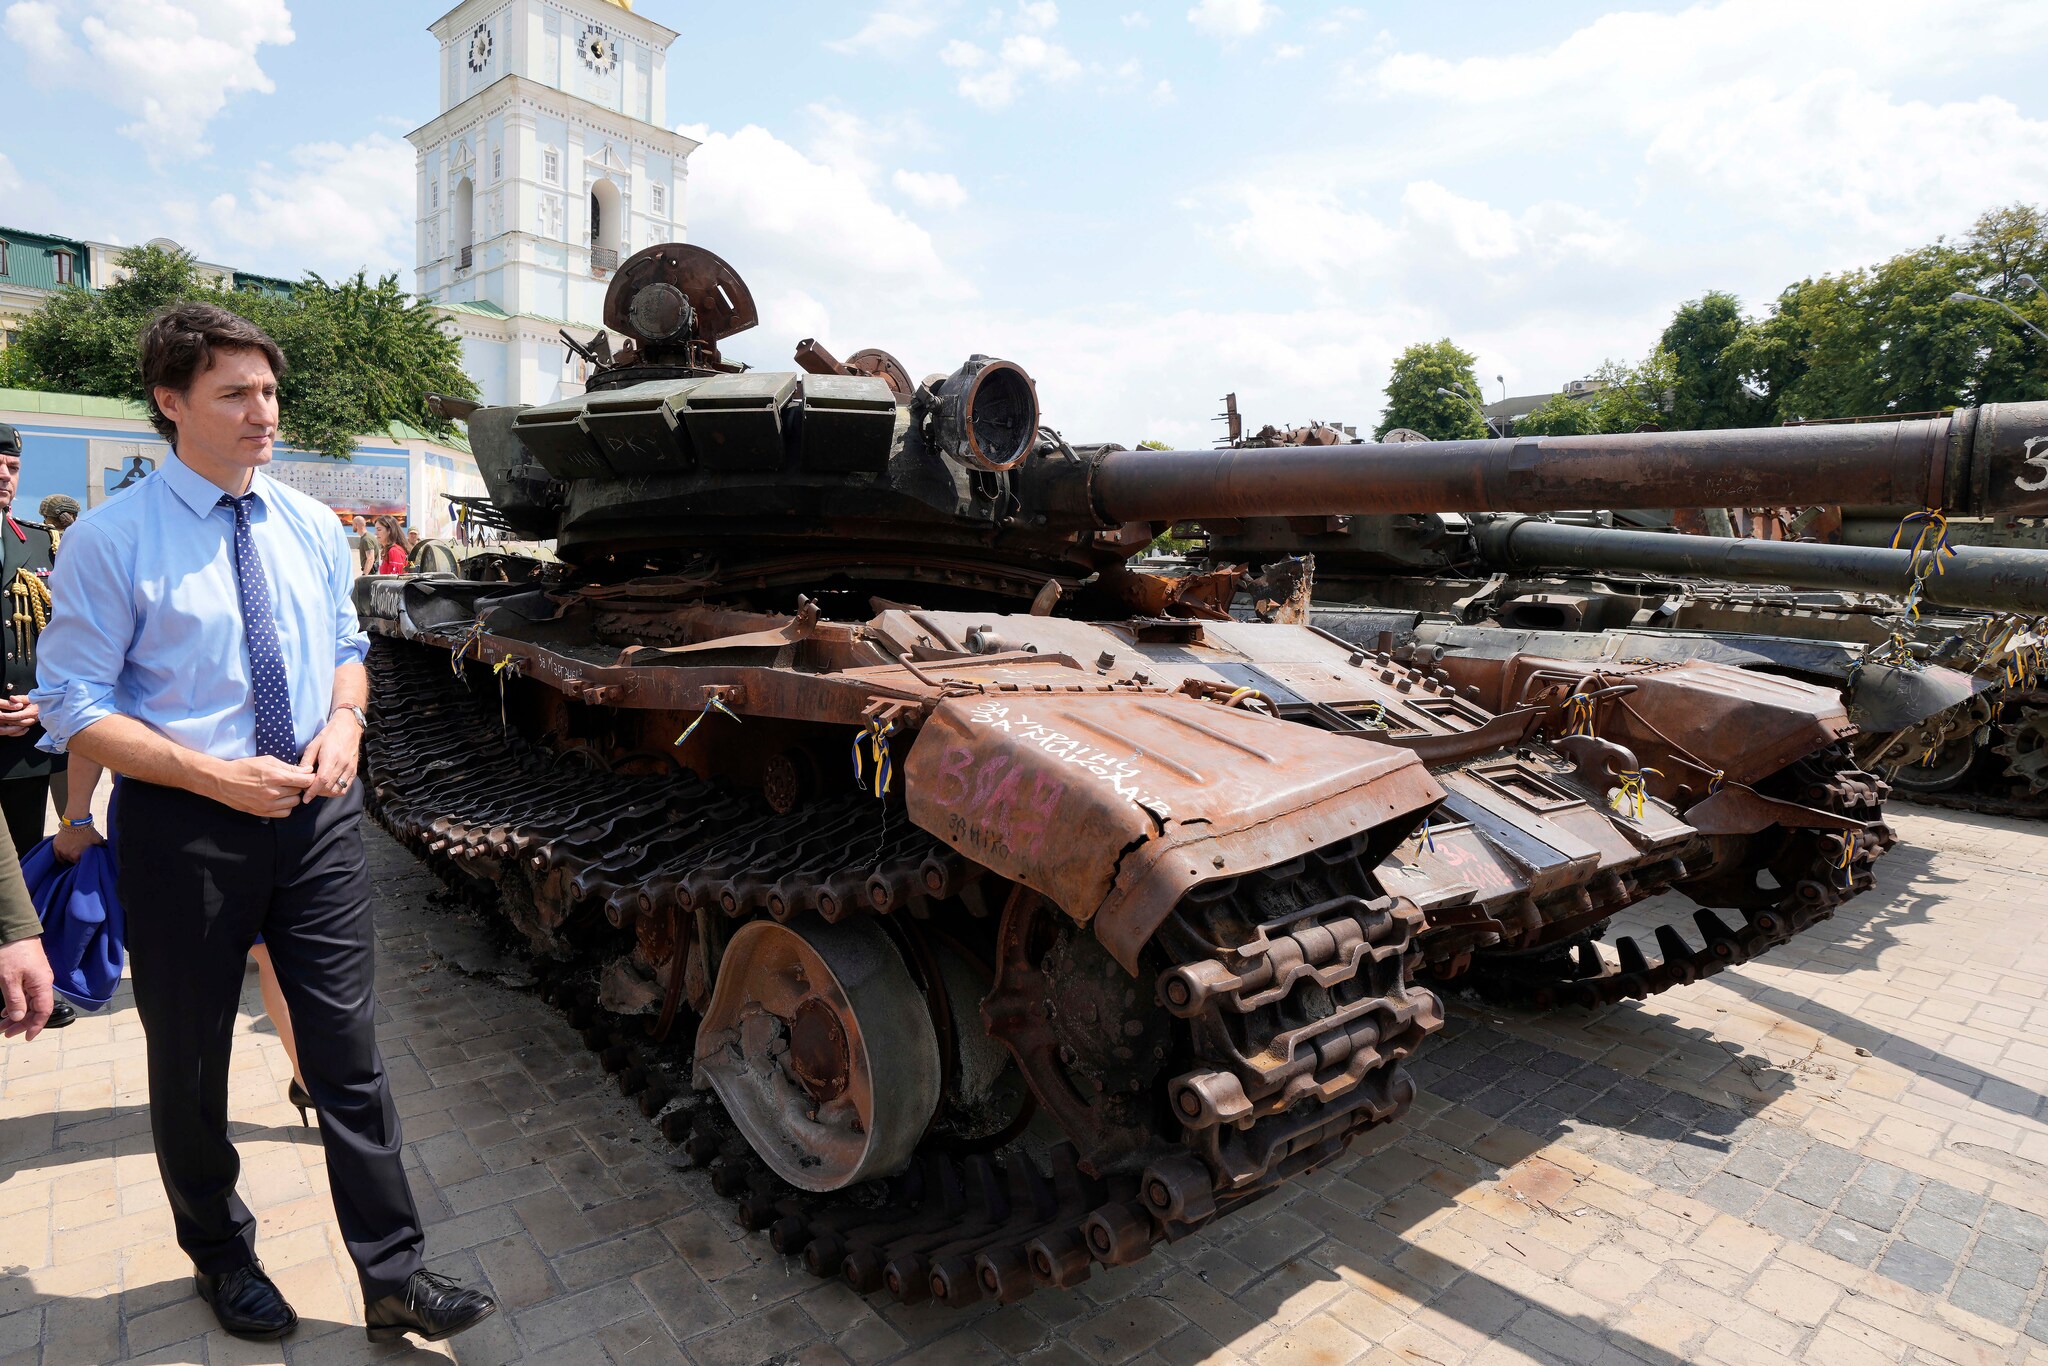 Il primo ministro canadese Justin Trudeau osserva i carri armati russi bruciati a Kiev (Frank Gunn/The Canadian Press via AP)